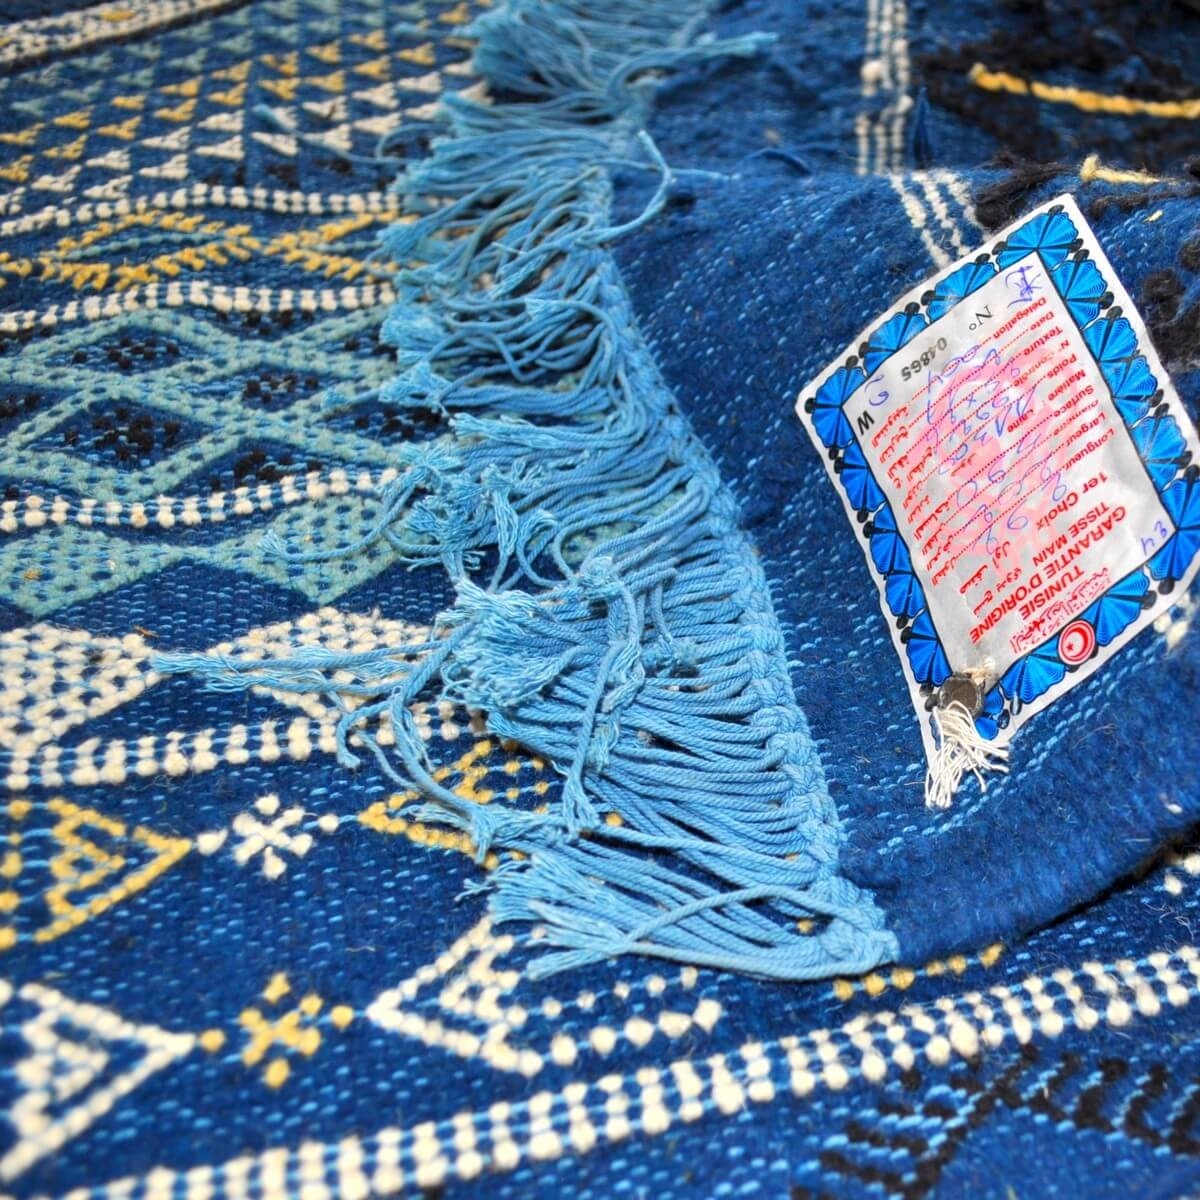 Berber carpet Large Rug Margoum Zaytouna 200x290 Blue (Handmade, Wool, Tunisia) Tunisian margoum rug from the city of Kairouan. 